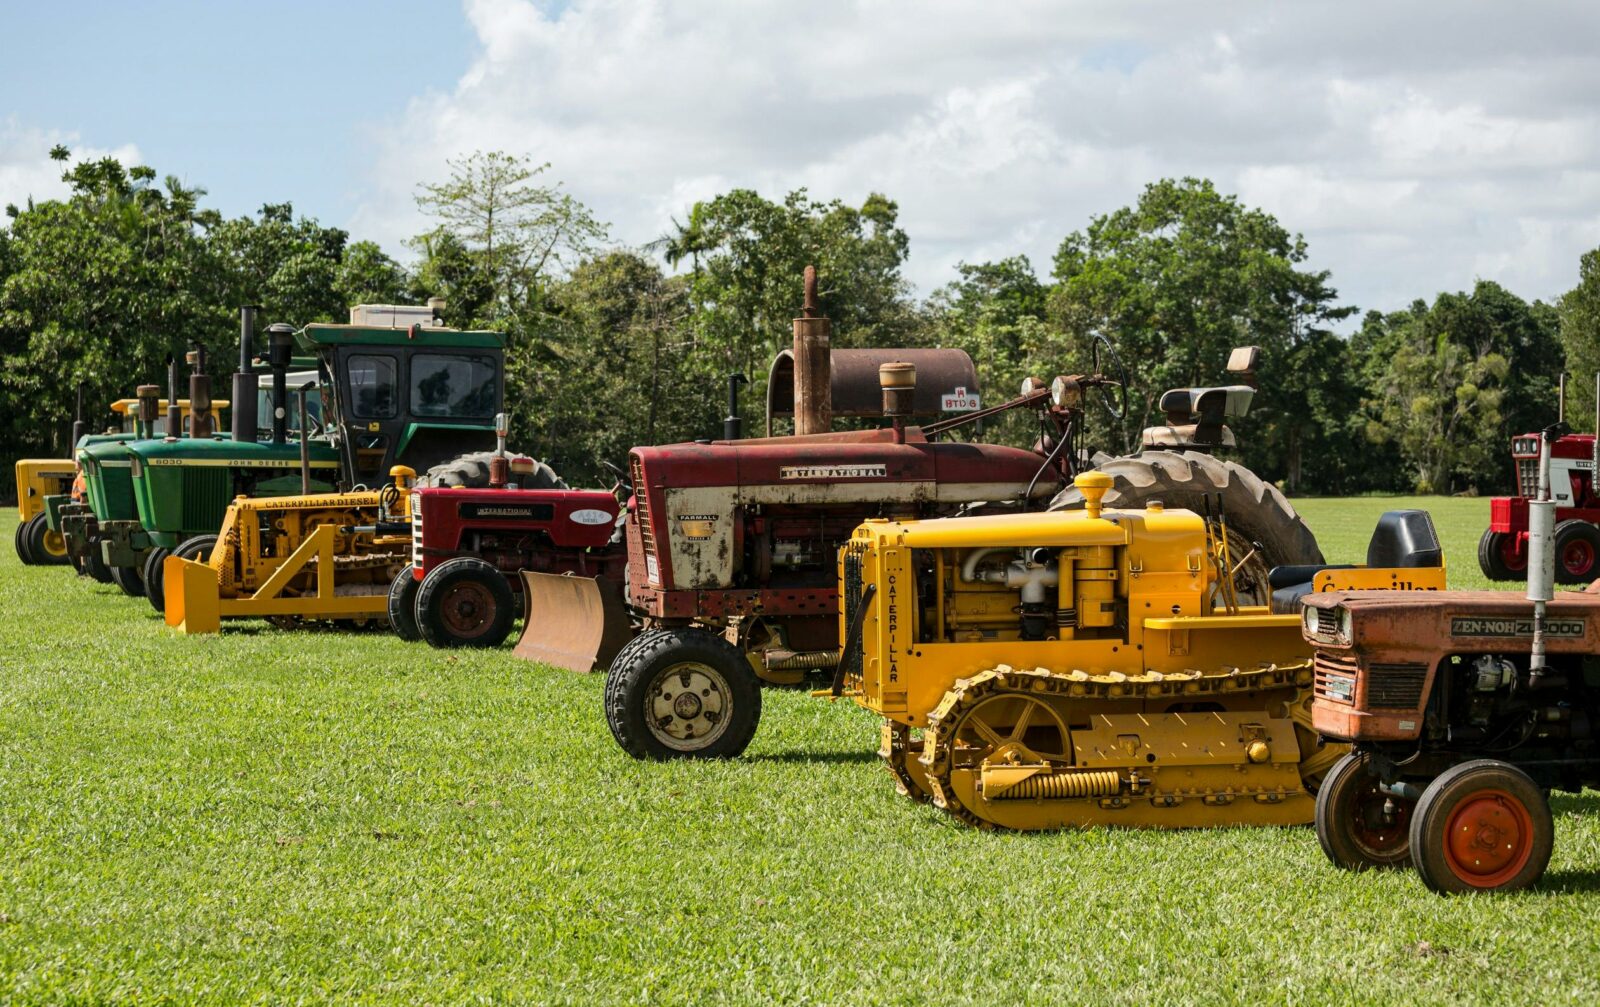 Display of old tractors